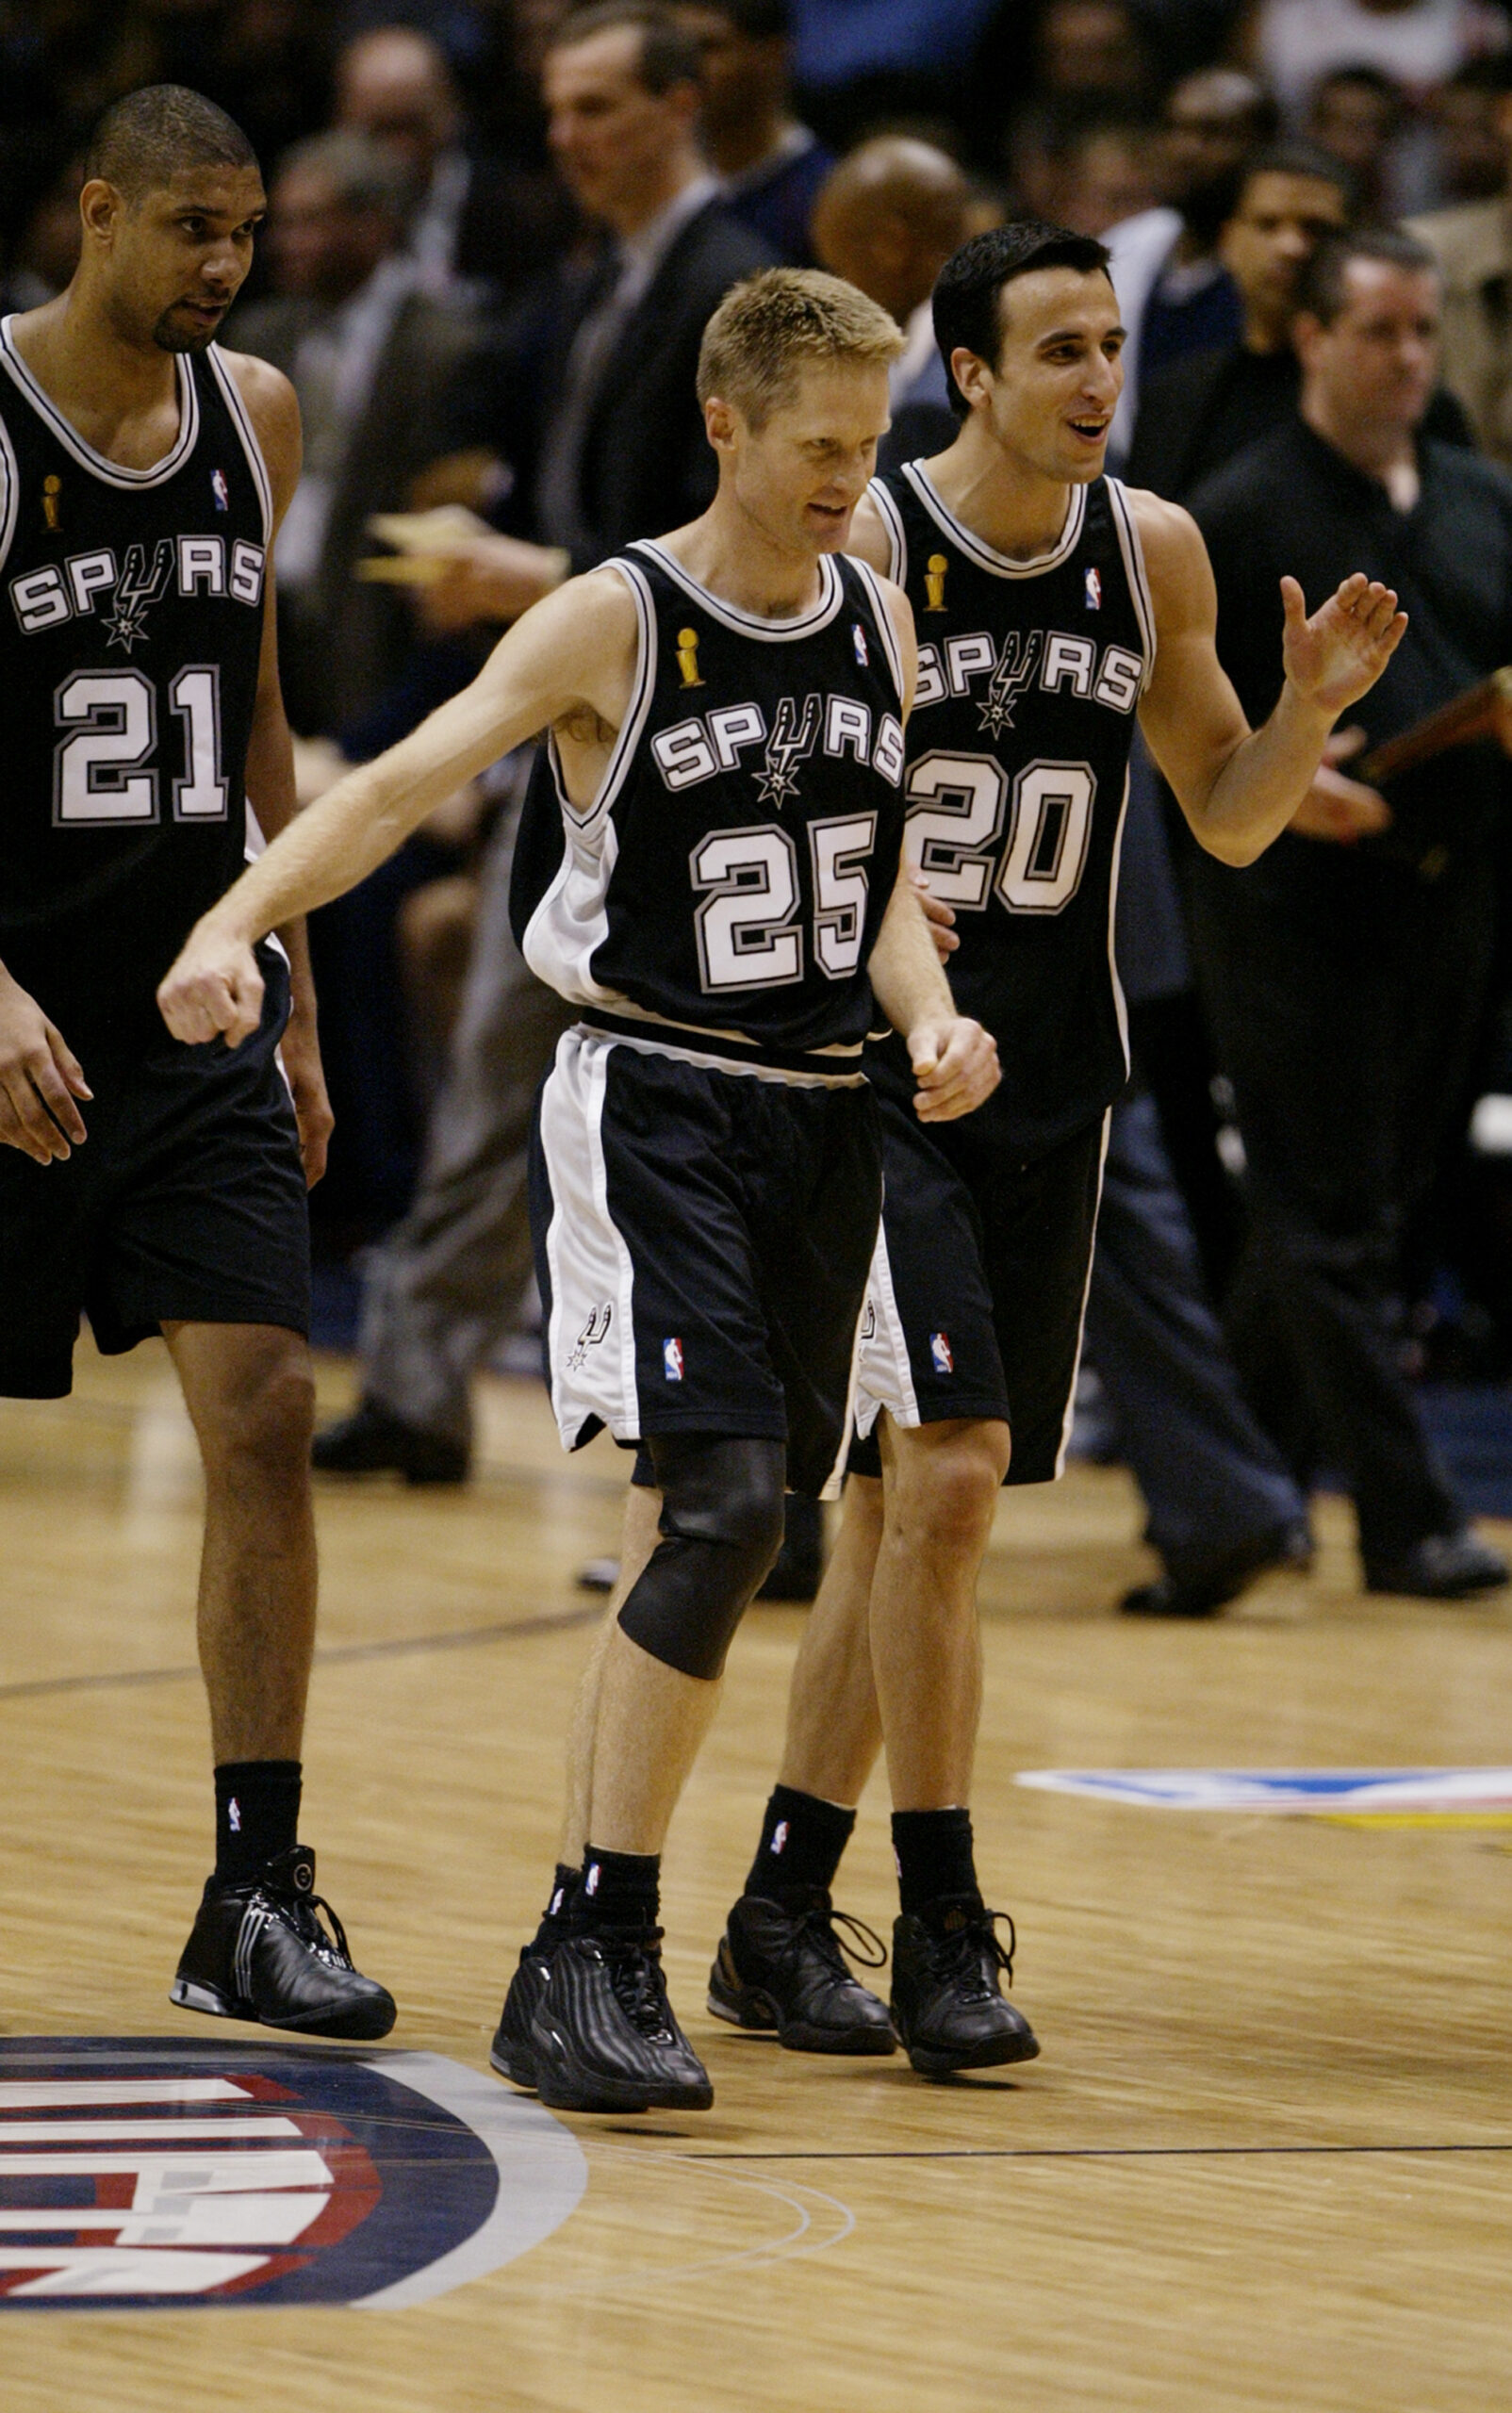 Steve Kerr won 2 titles with the San Antonio Spurs, with Tim Duncan and Manu Ginobili